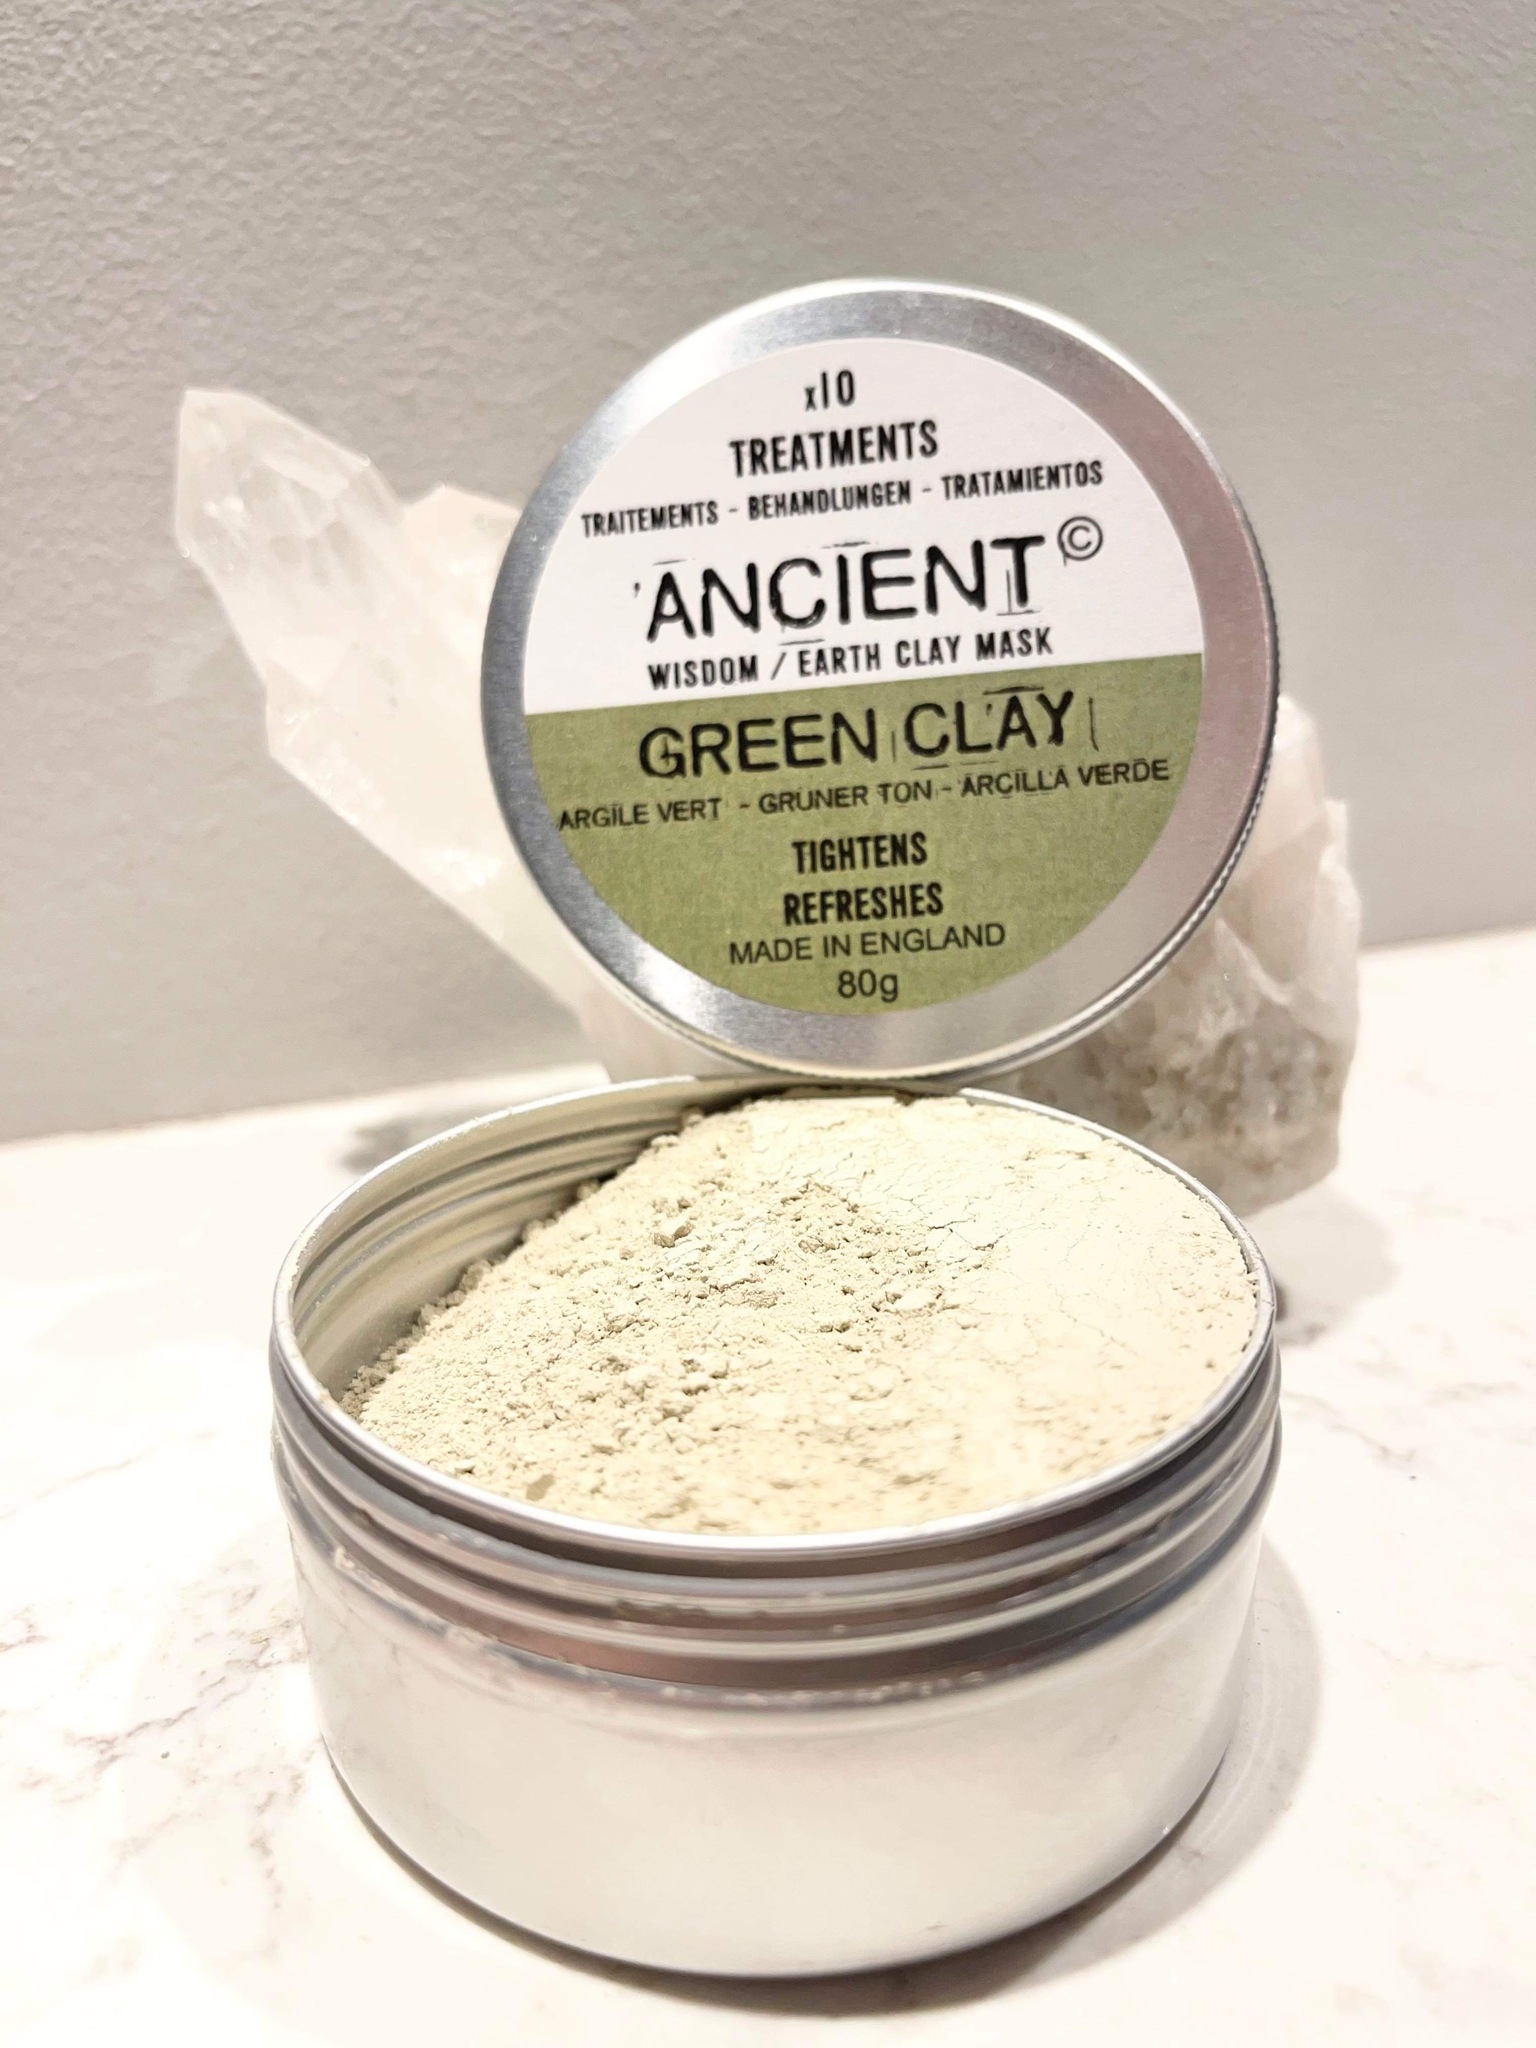 Earth clay mask - Green clay